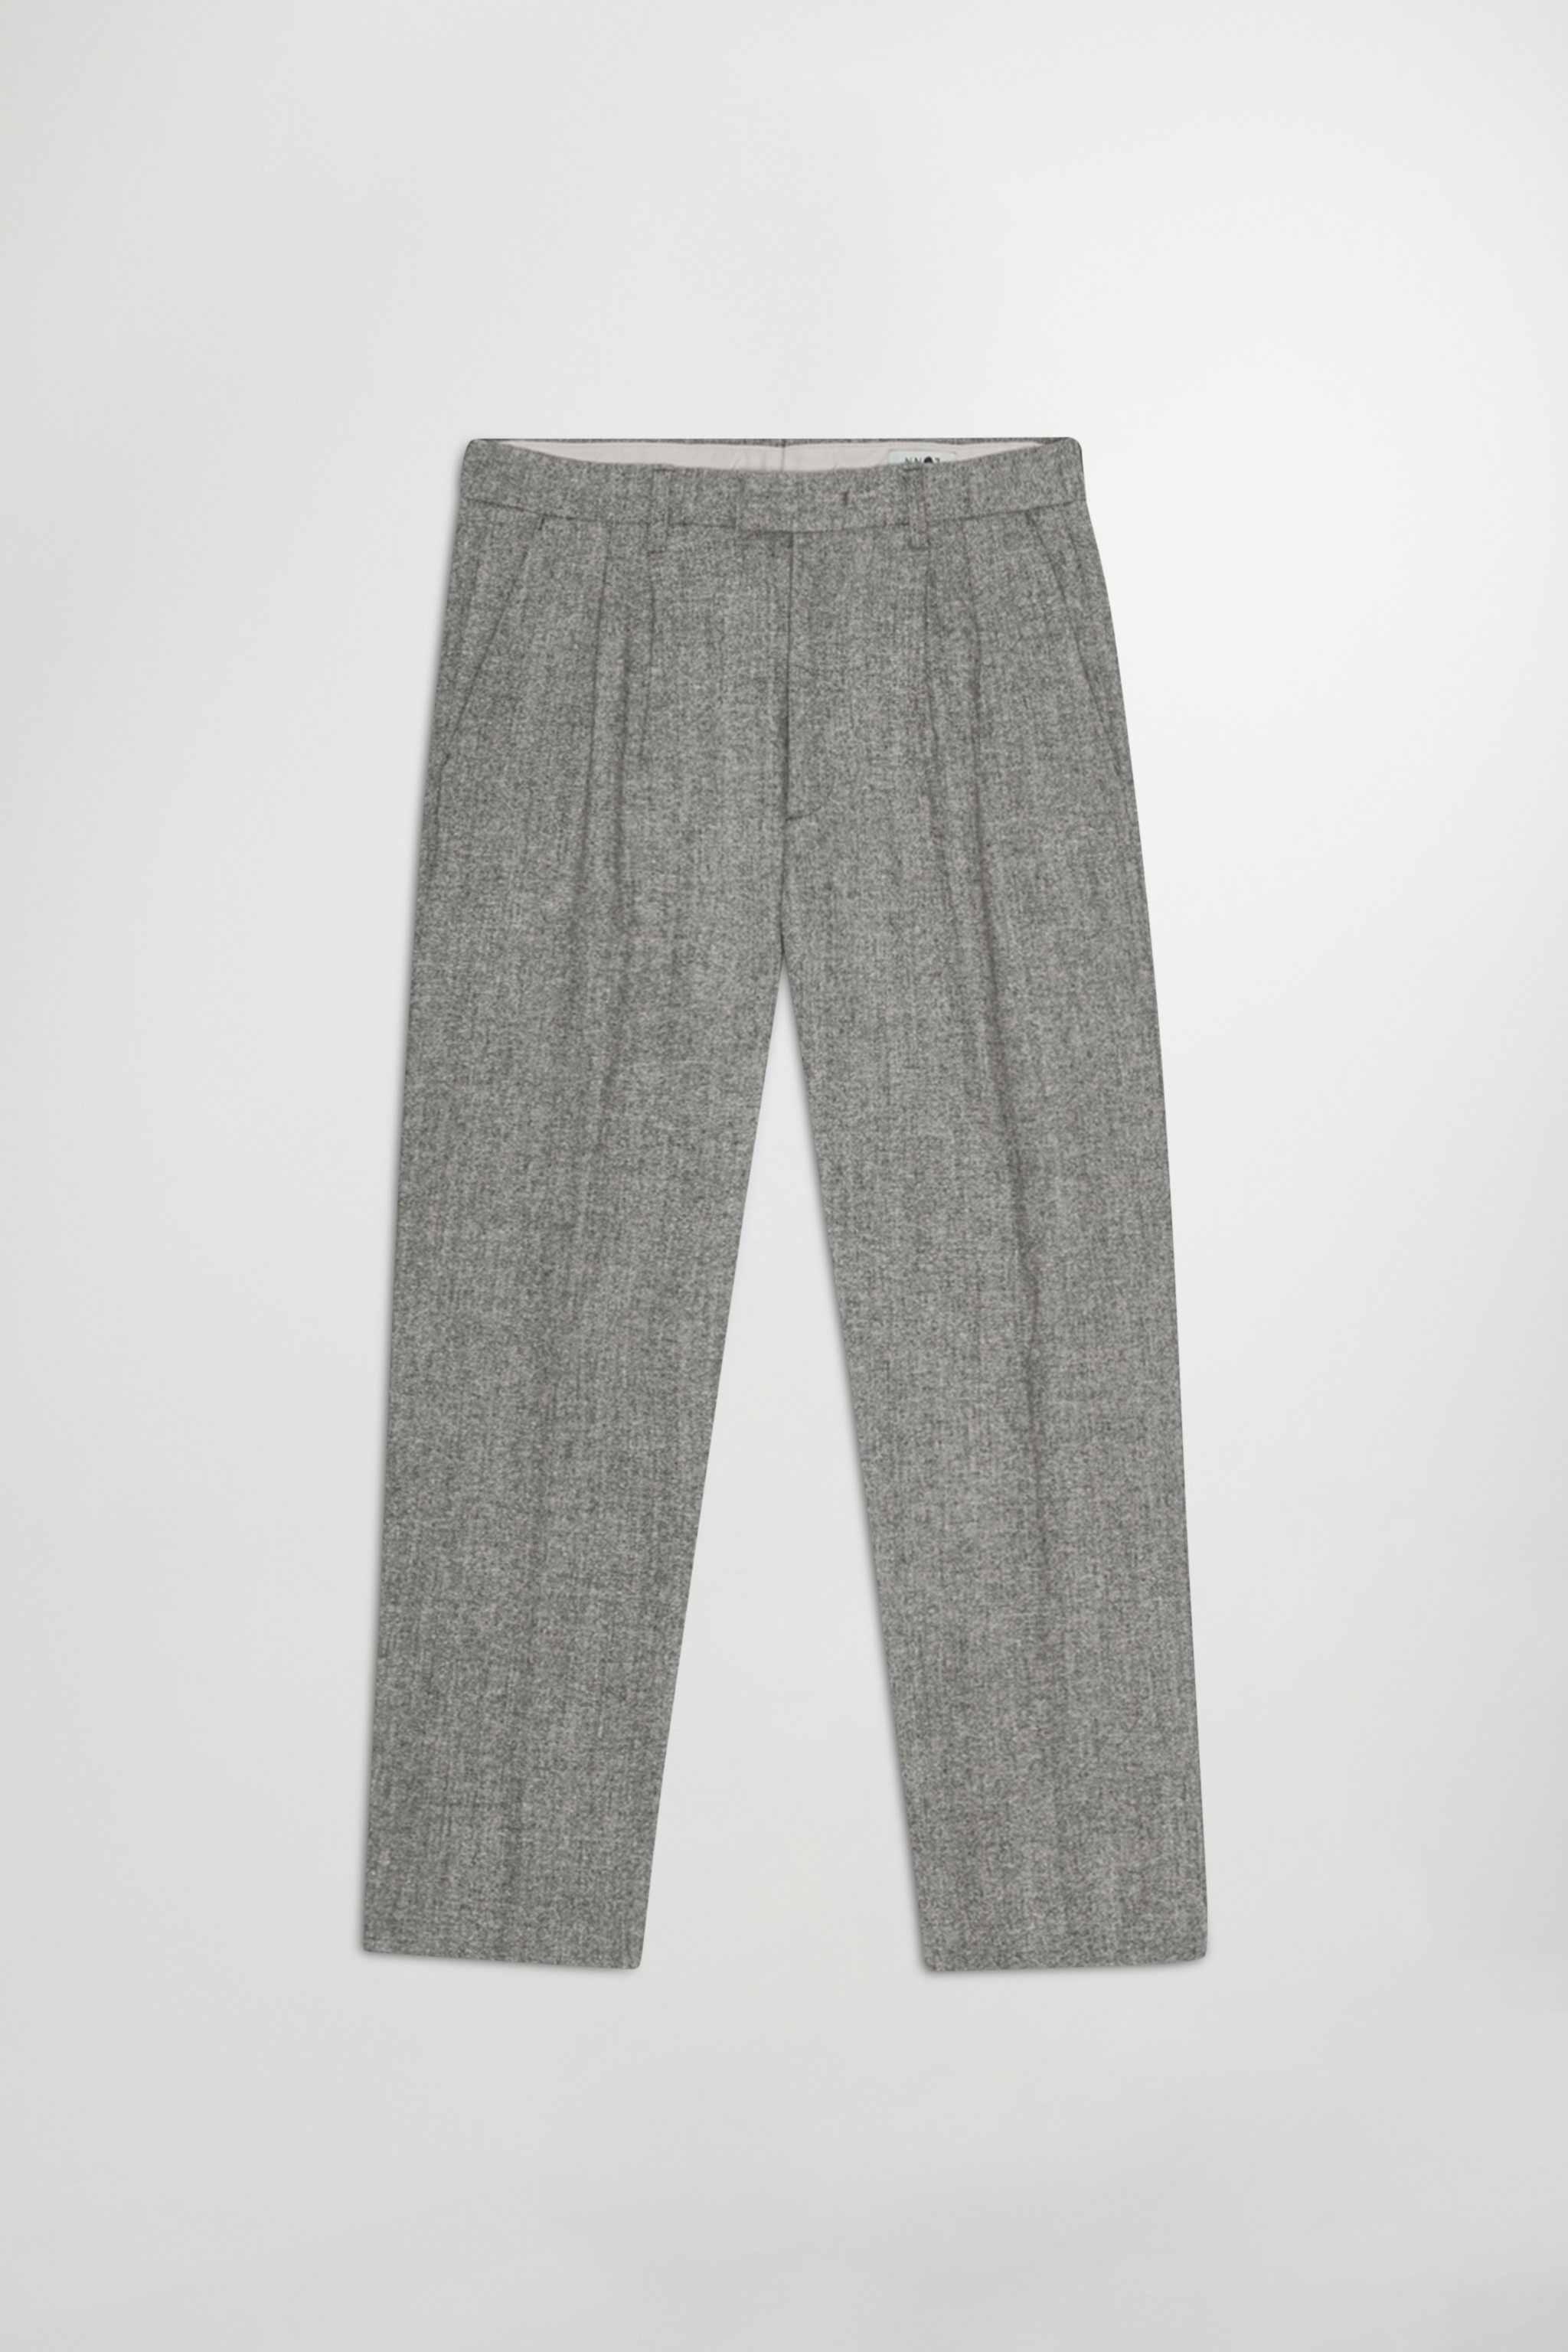 Fritz 1717 men's trousers - Grey - Buy online at NN.07®